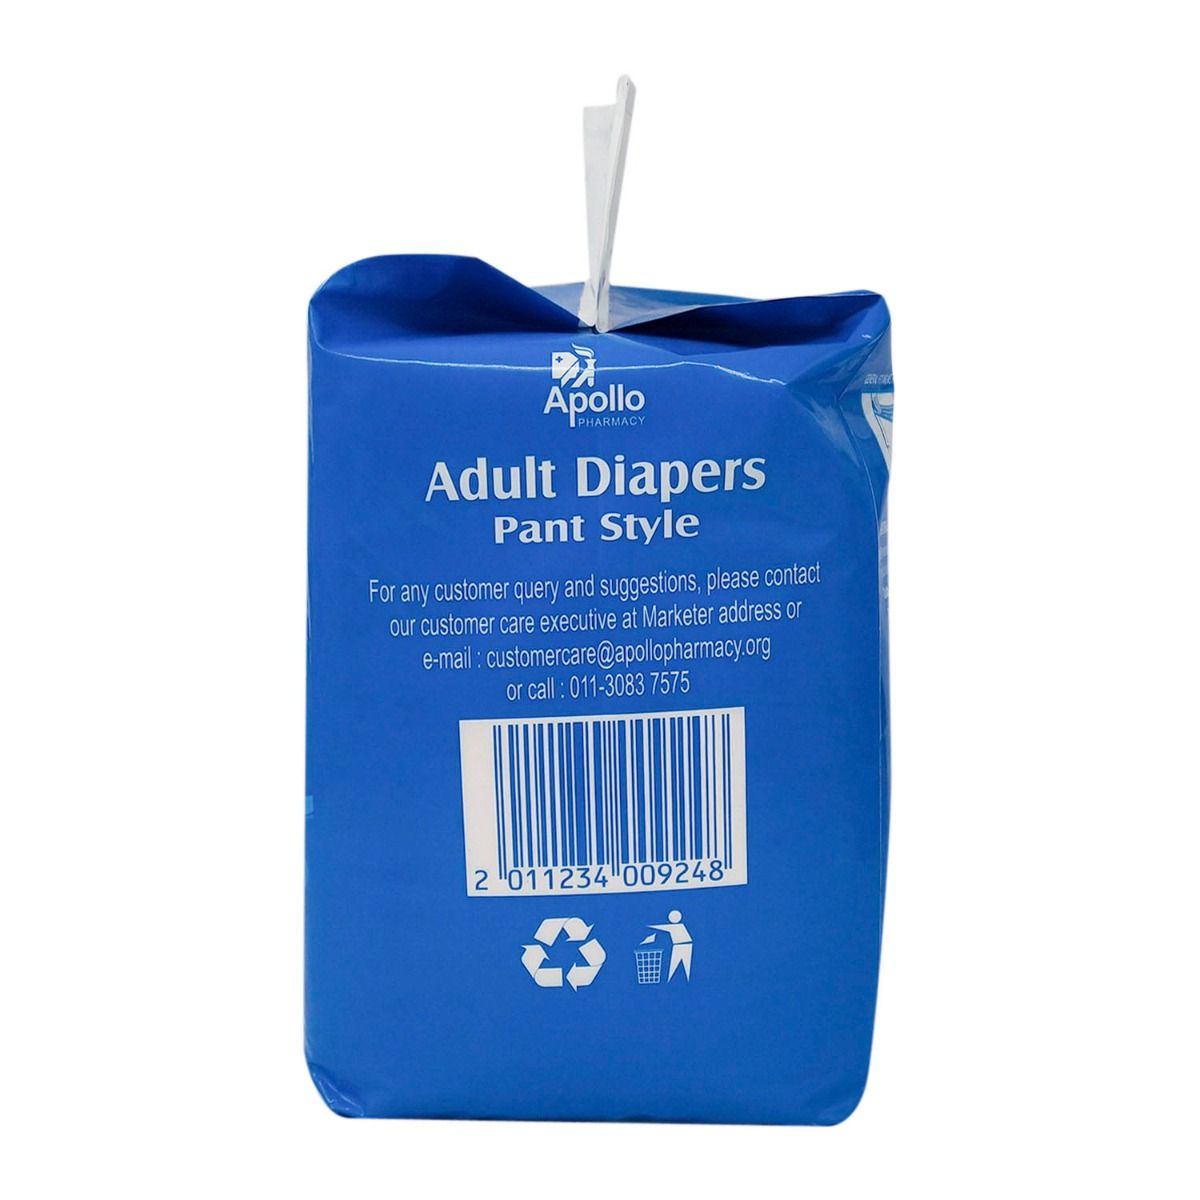 Apollo Pharmacy Adult Diaper Pants Medium, 10 Count, Pack of 1 